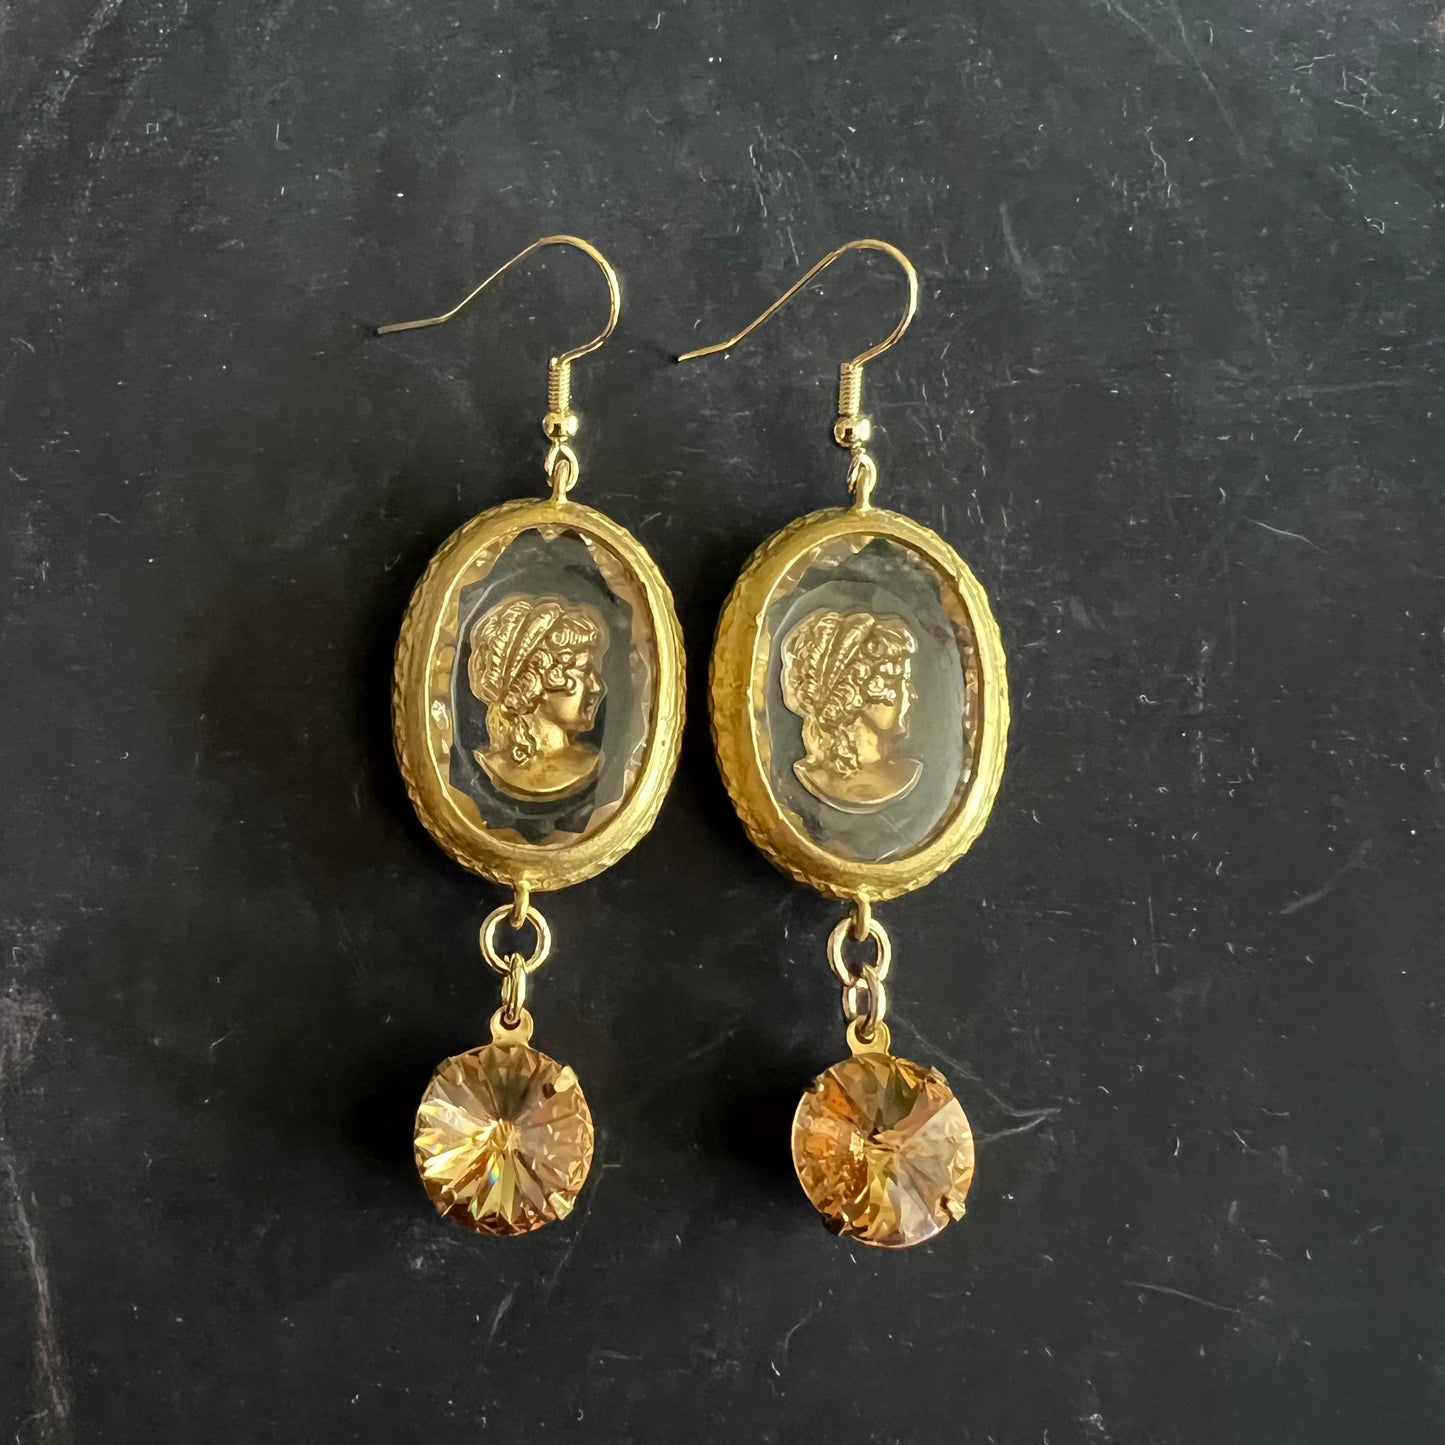 Vintage Golden Cameo & Crystal Earrings